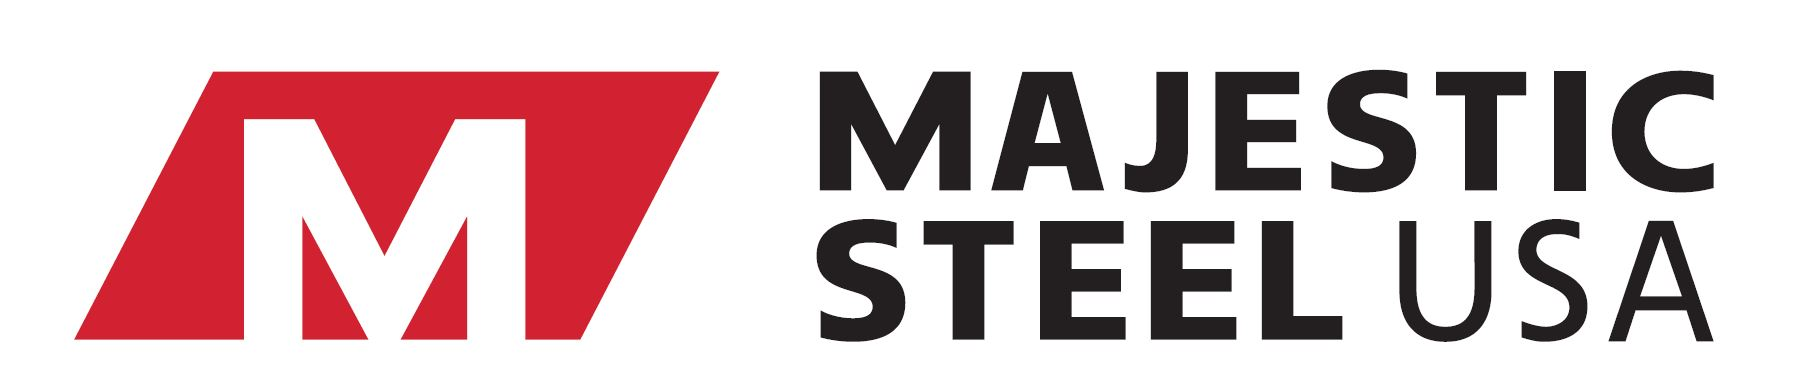 Majestic Steel USA logo